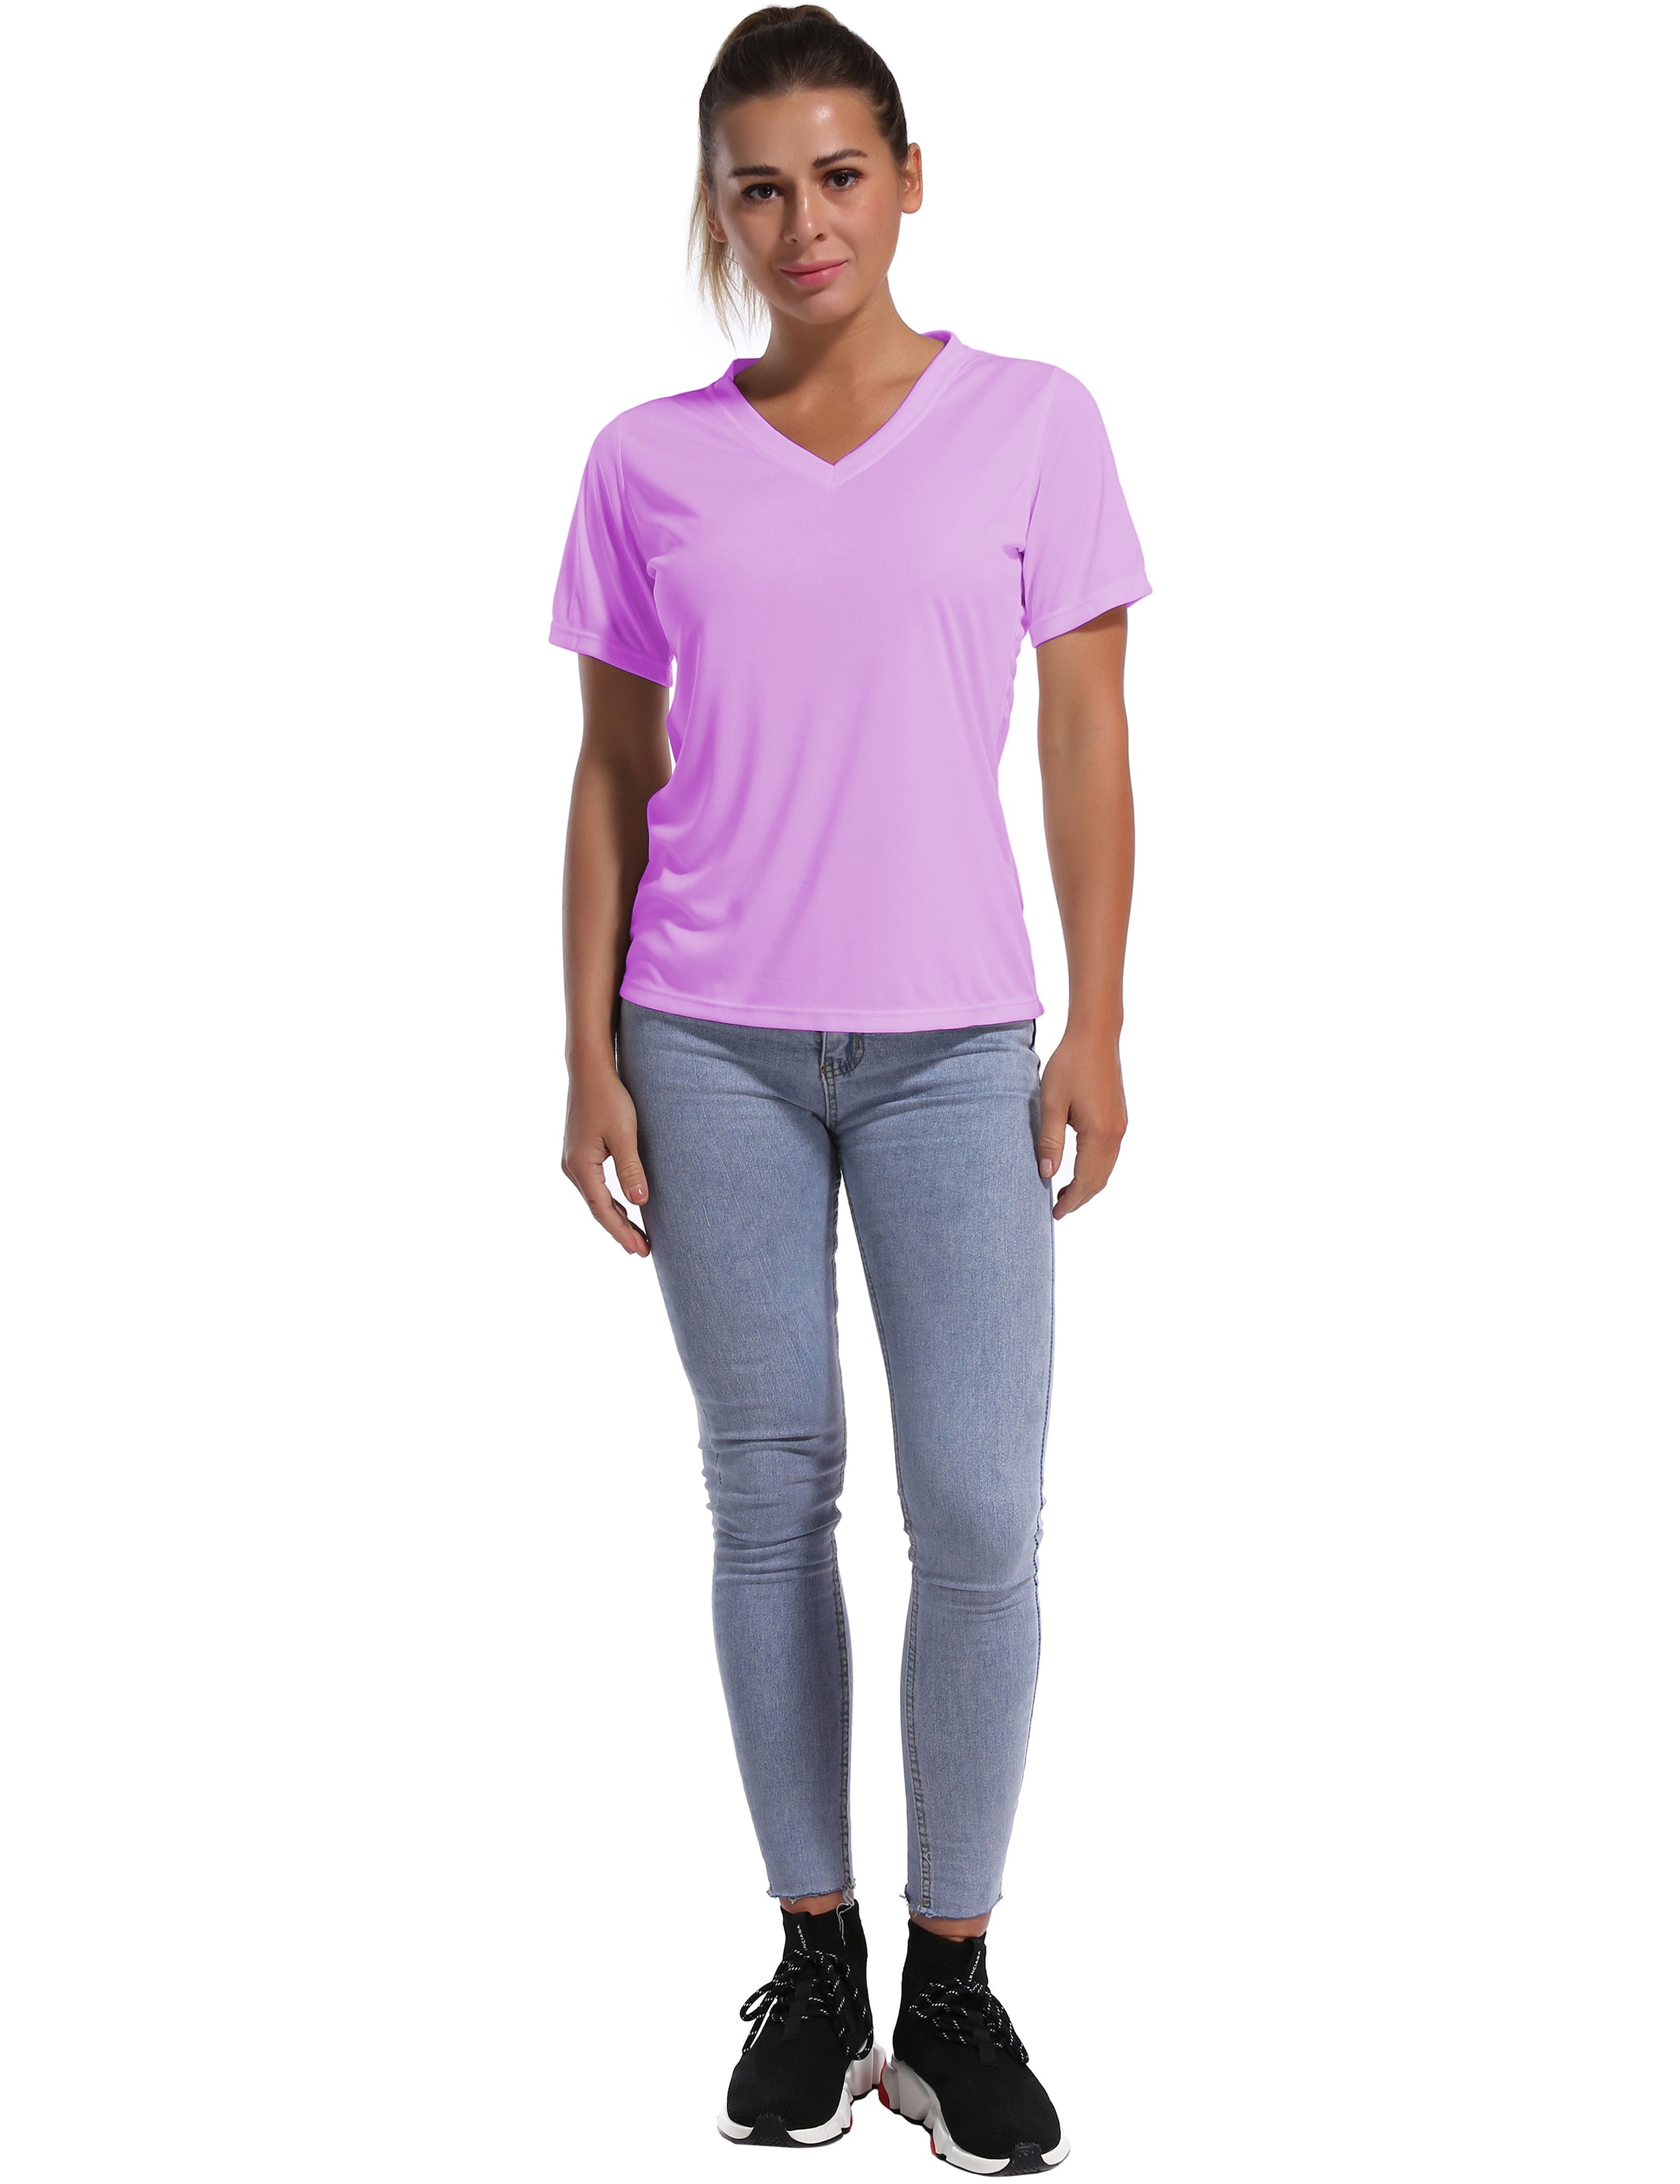 V-Neck Short Sleeve Athletic Shirts purple_Golf